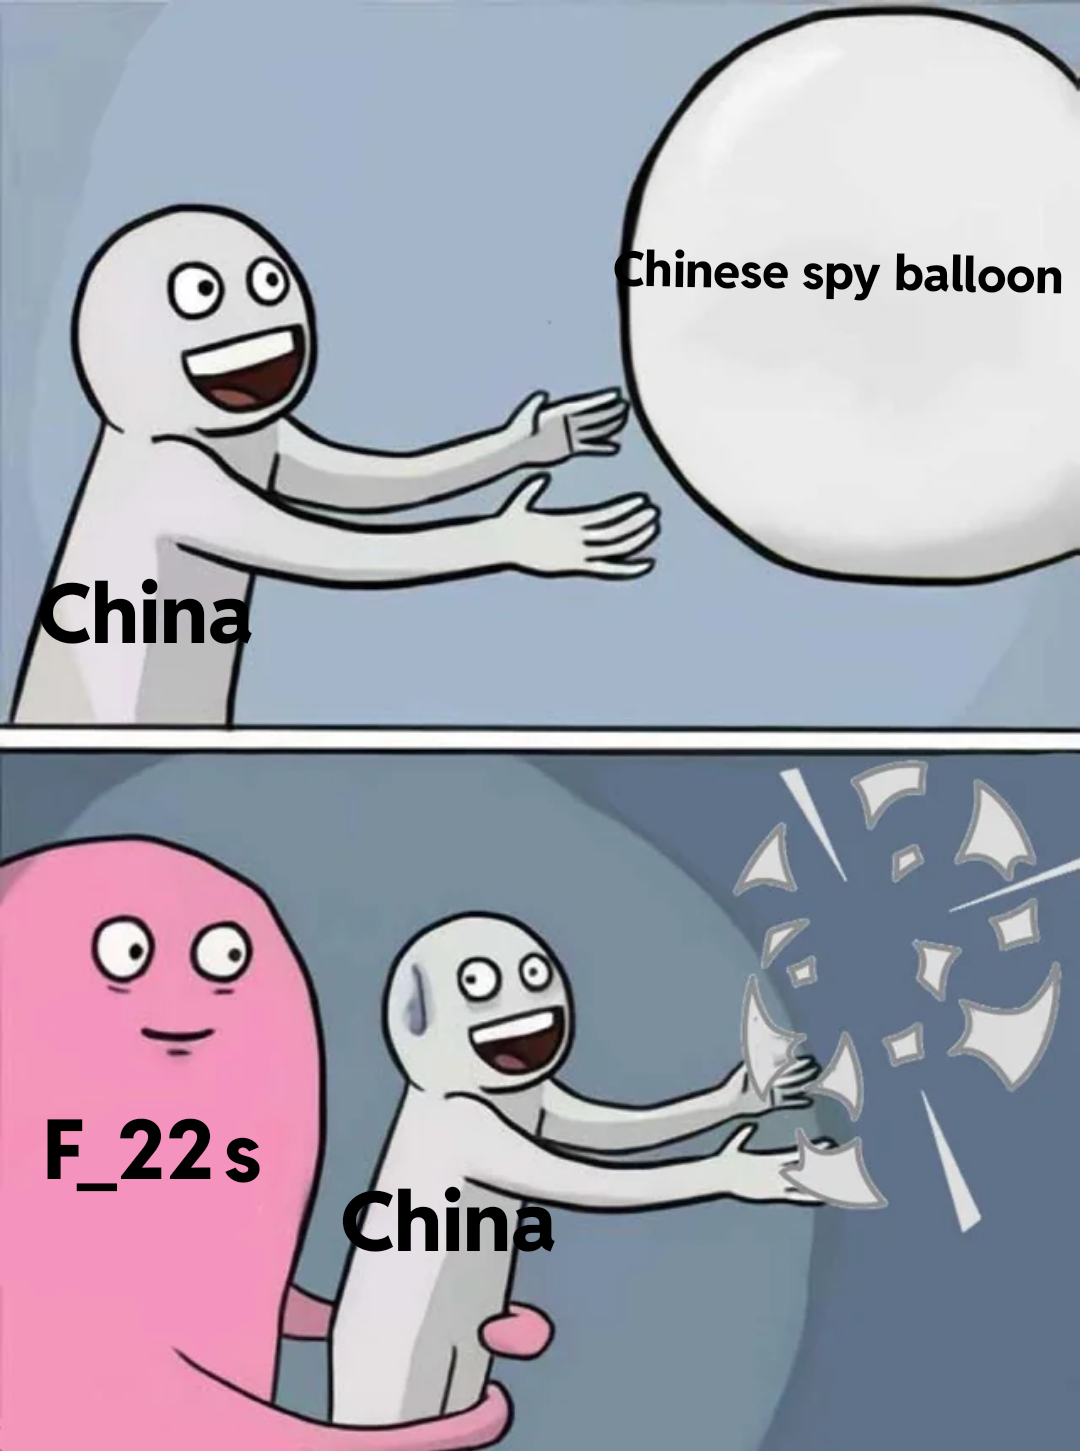 Chinese spy balloon memes - Meme - China F_22s China Chinese spy balloon 3